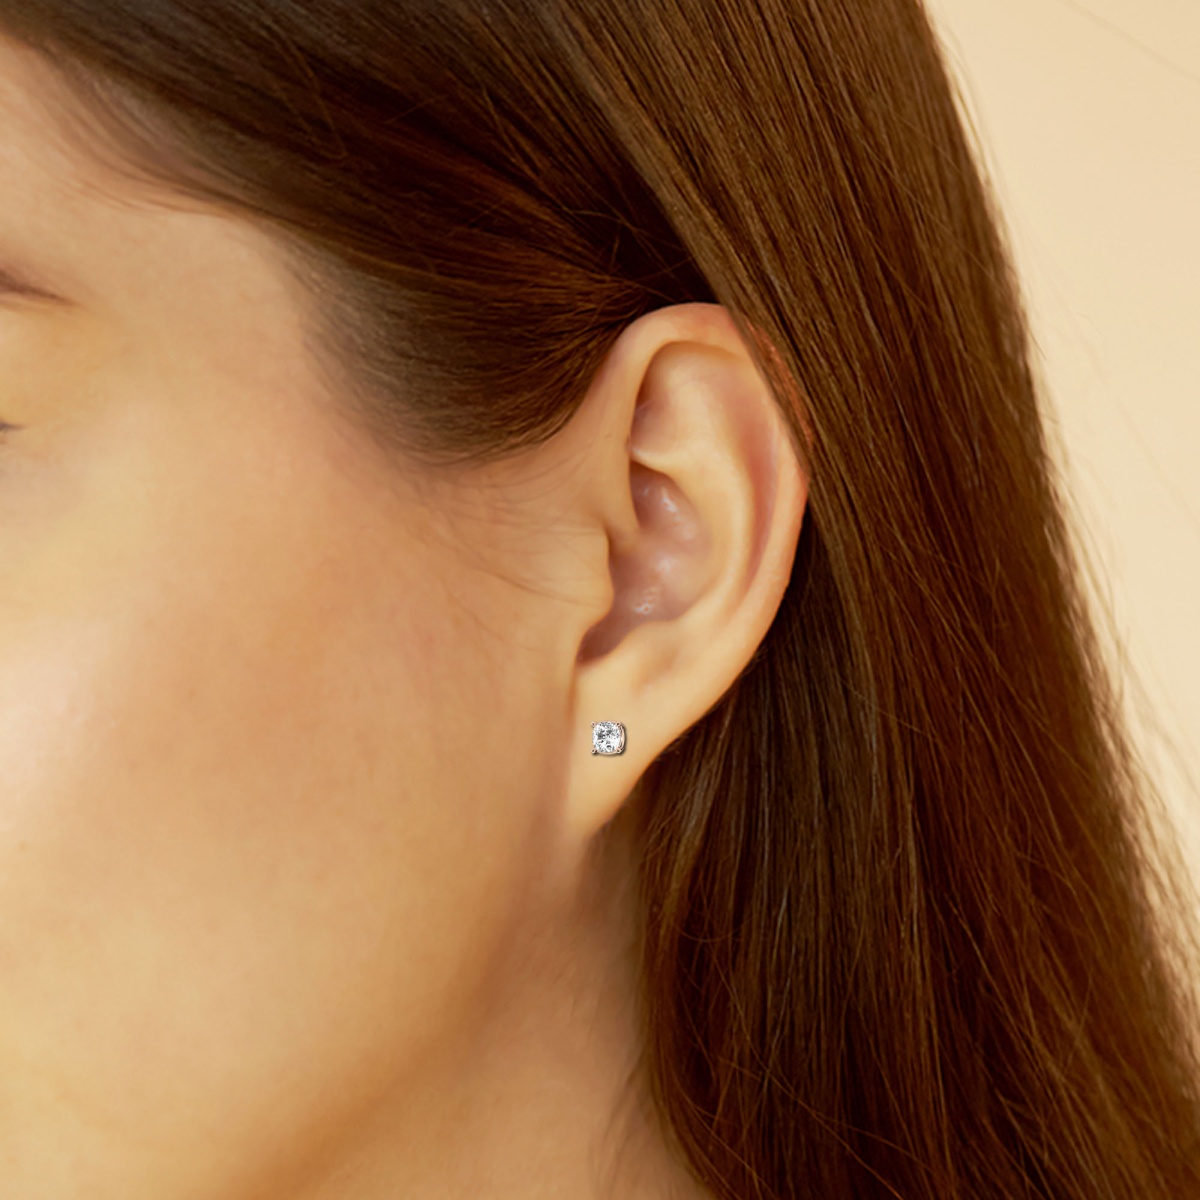 1/2 ctw Cushion Lab Grown Diamond Solitaire Stud Earrings